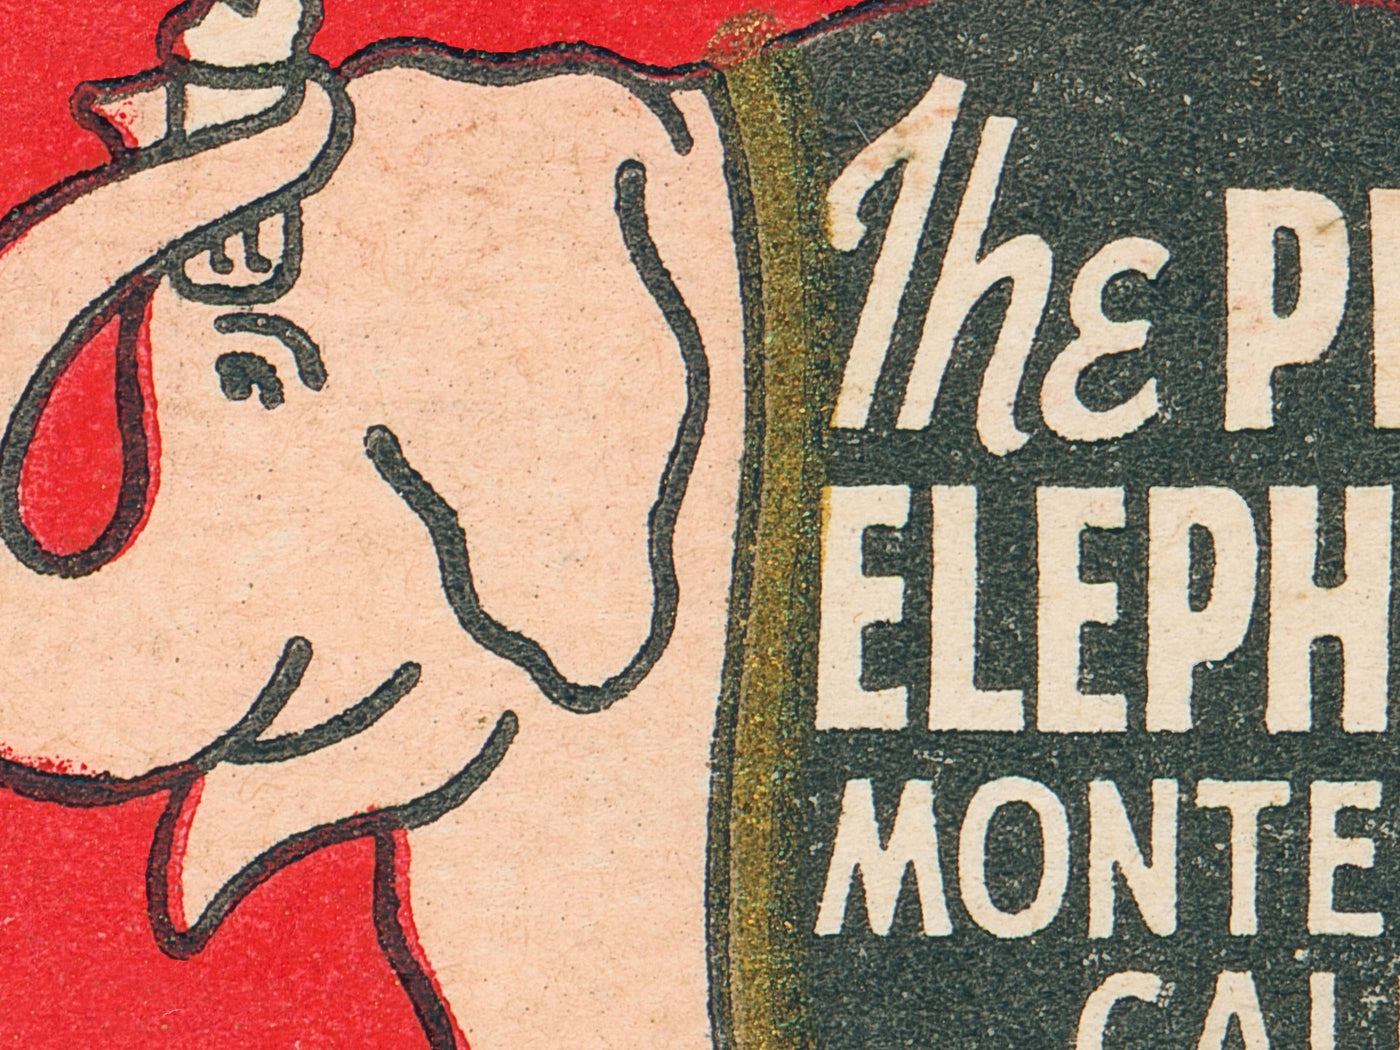 The Pink Elephant Matchbook Print